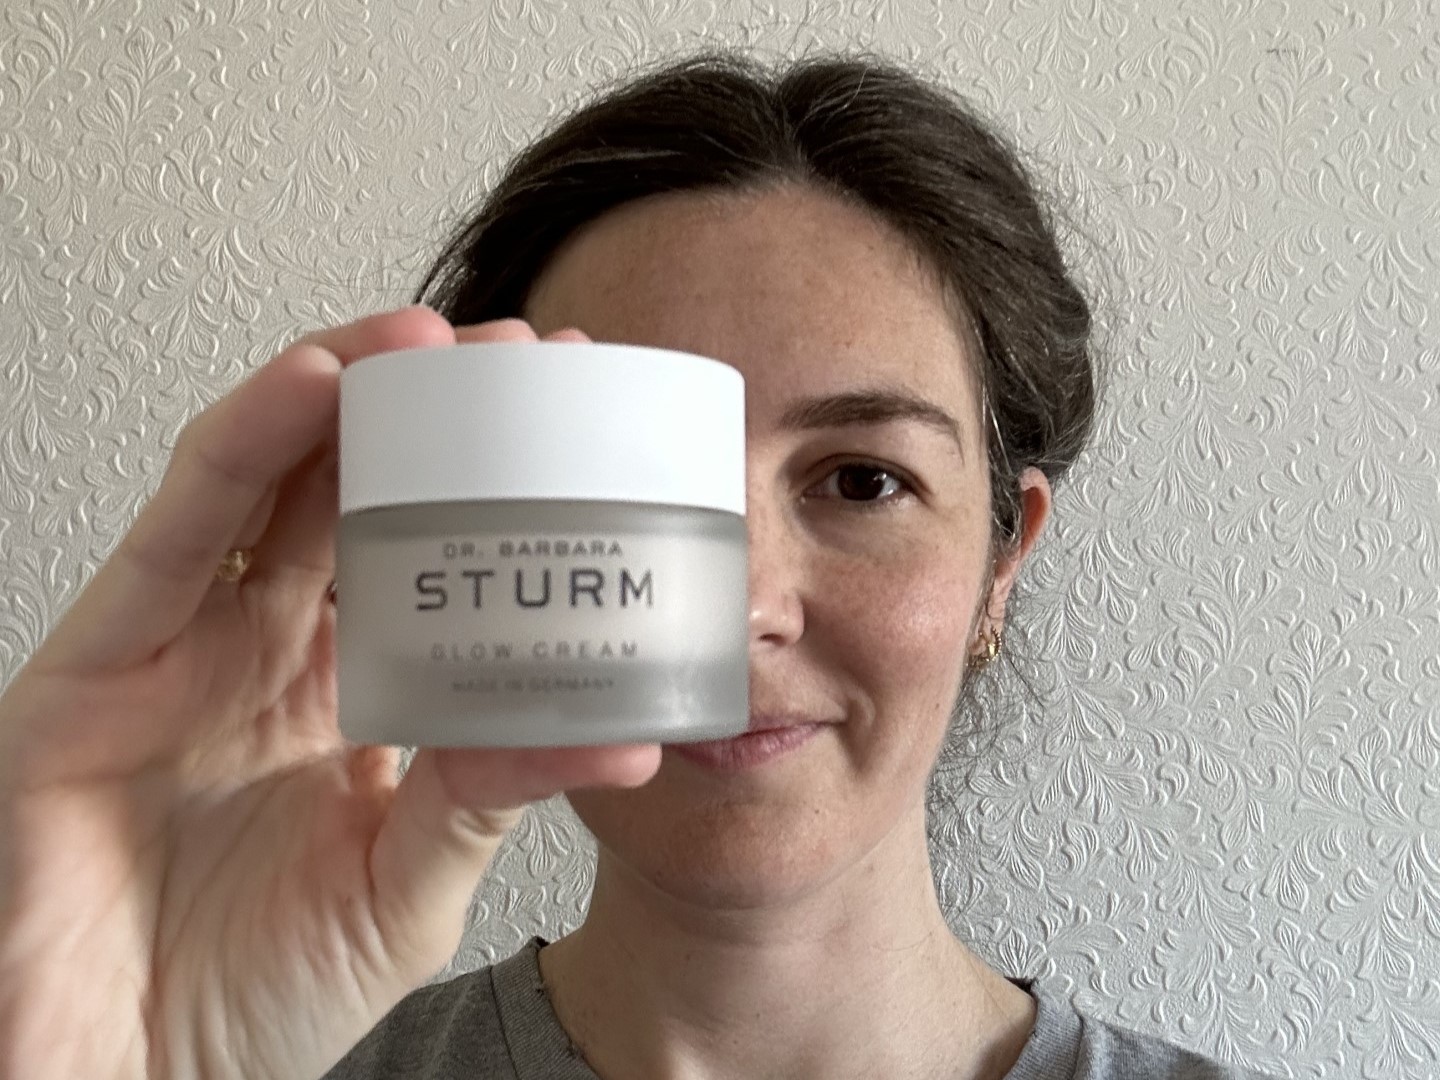 Victoria's Dr Barbara Sturm Glow Cream review | Space NK